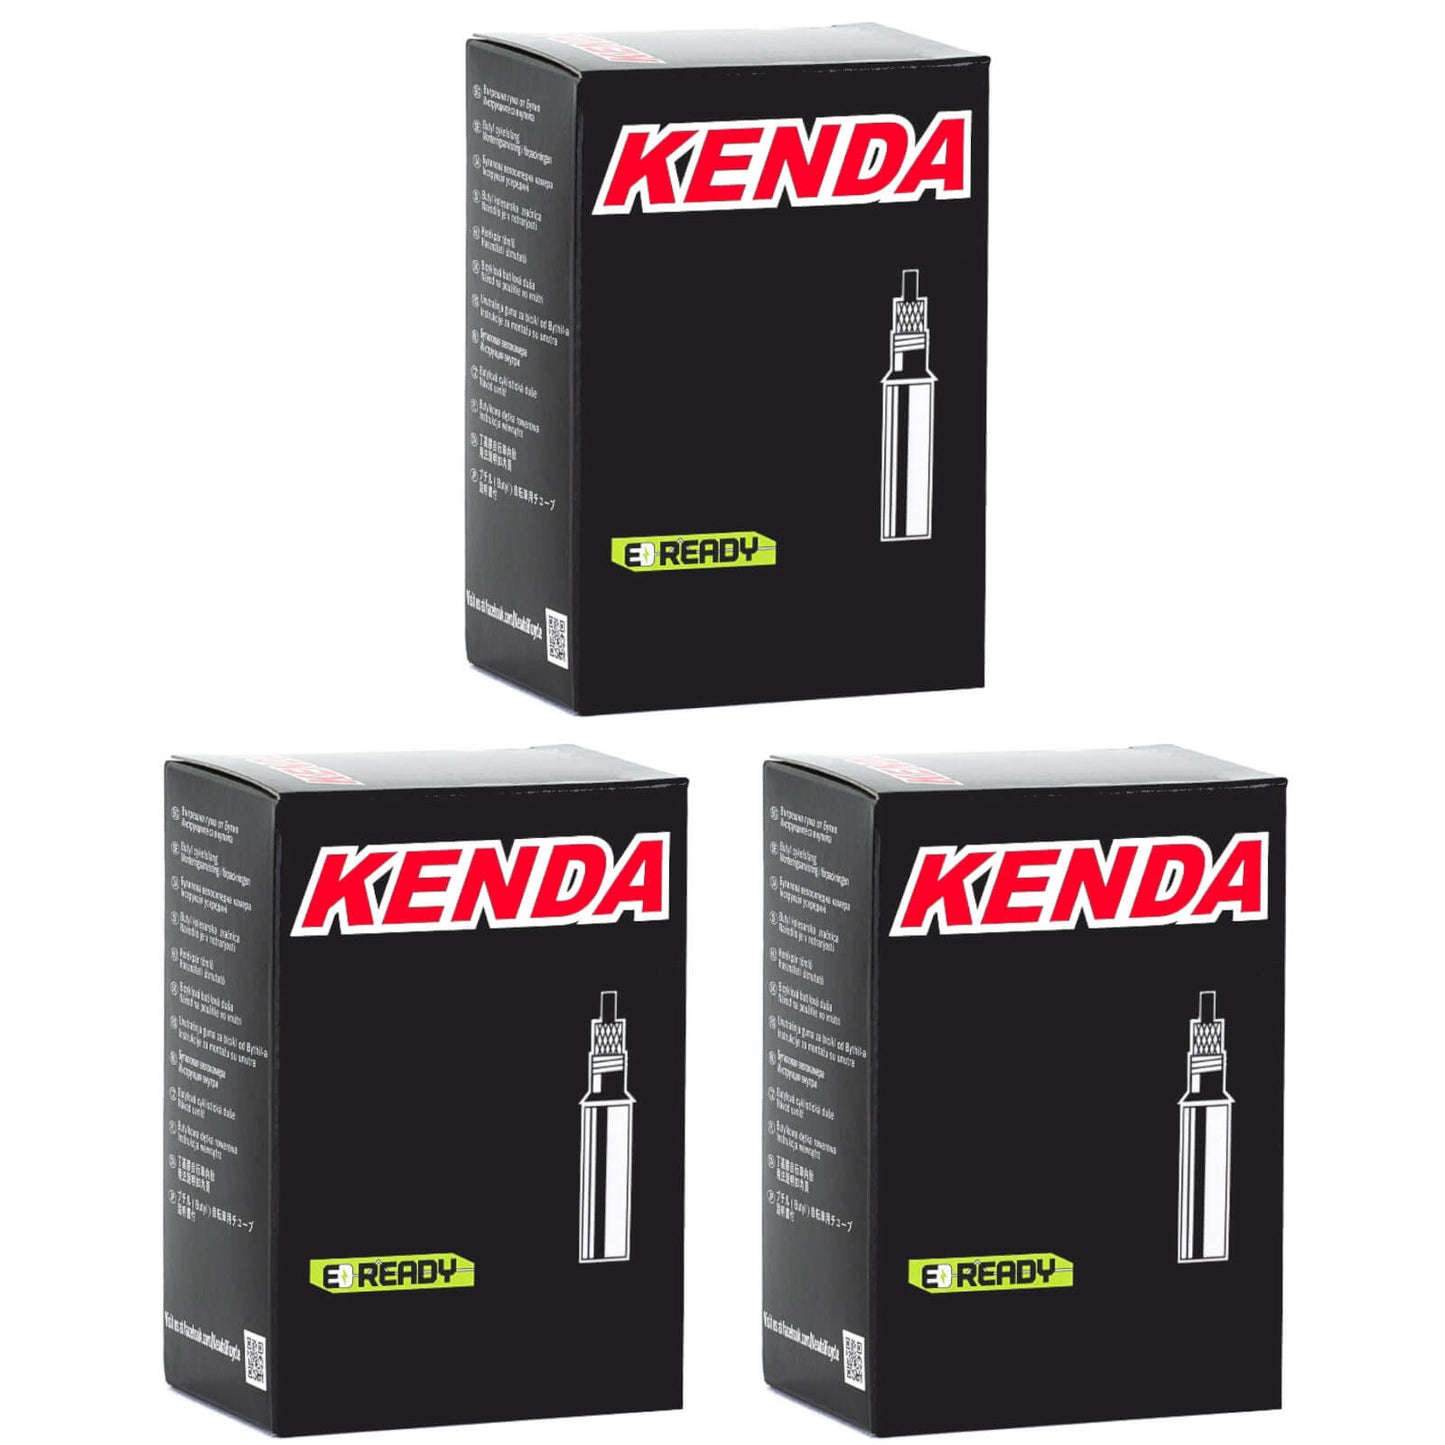 Kenda 24x1.5-2.0" 24 Inch Presta Valve Bike Inner Tube Pack of 3